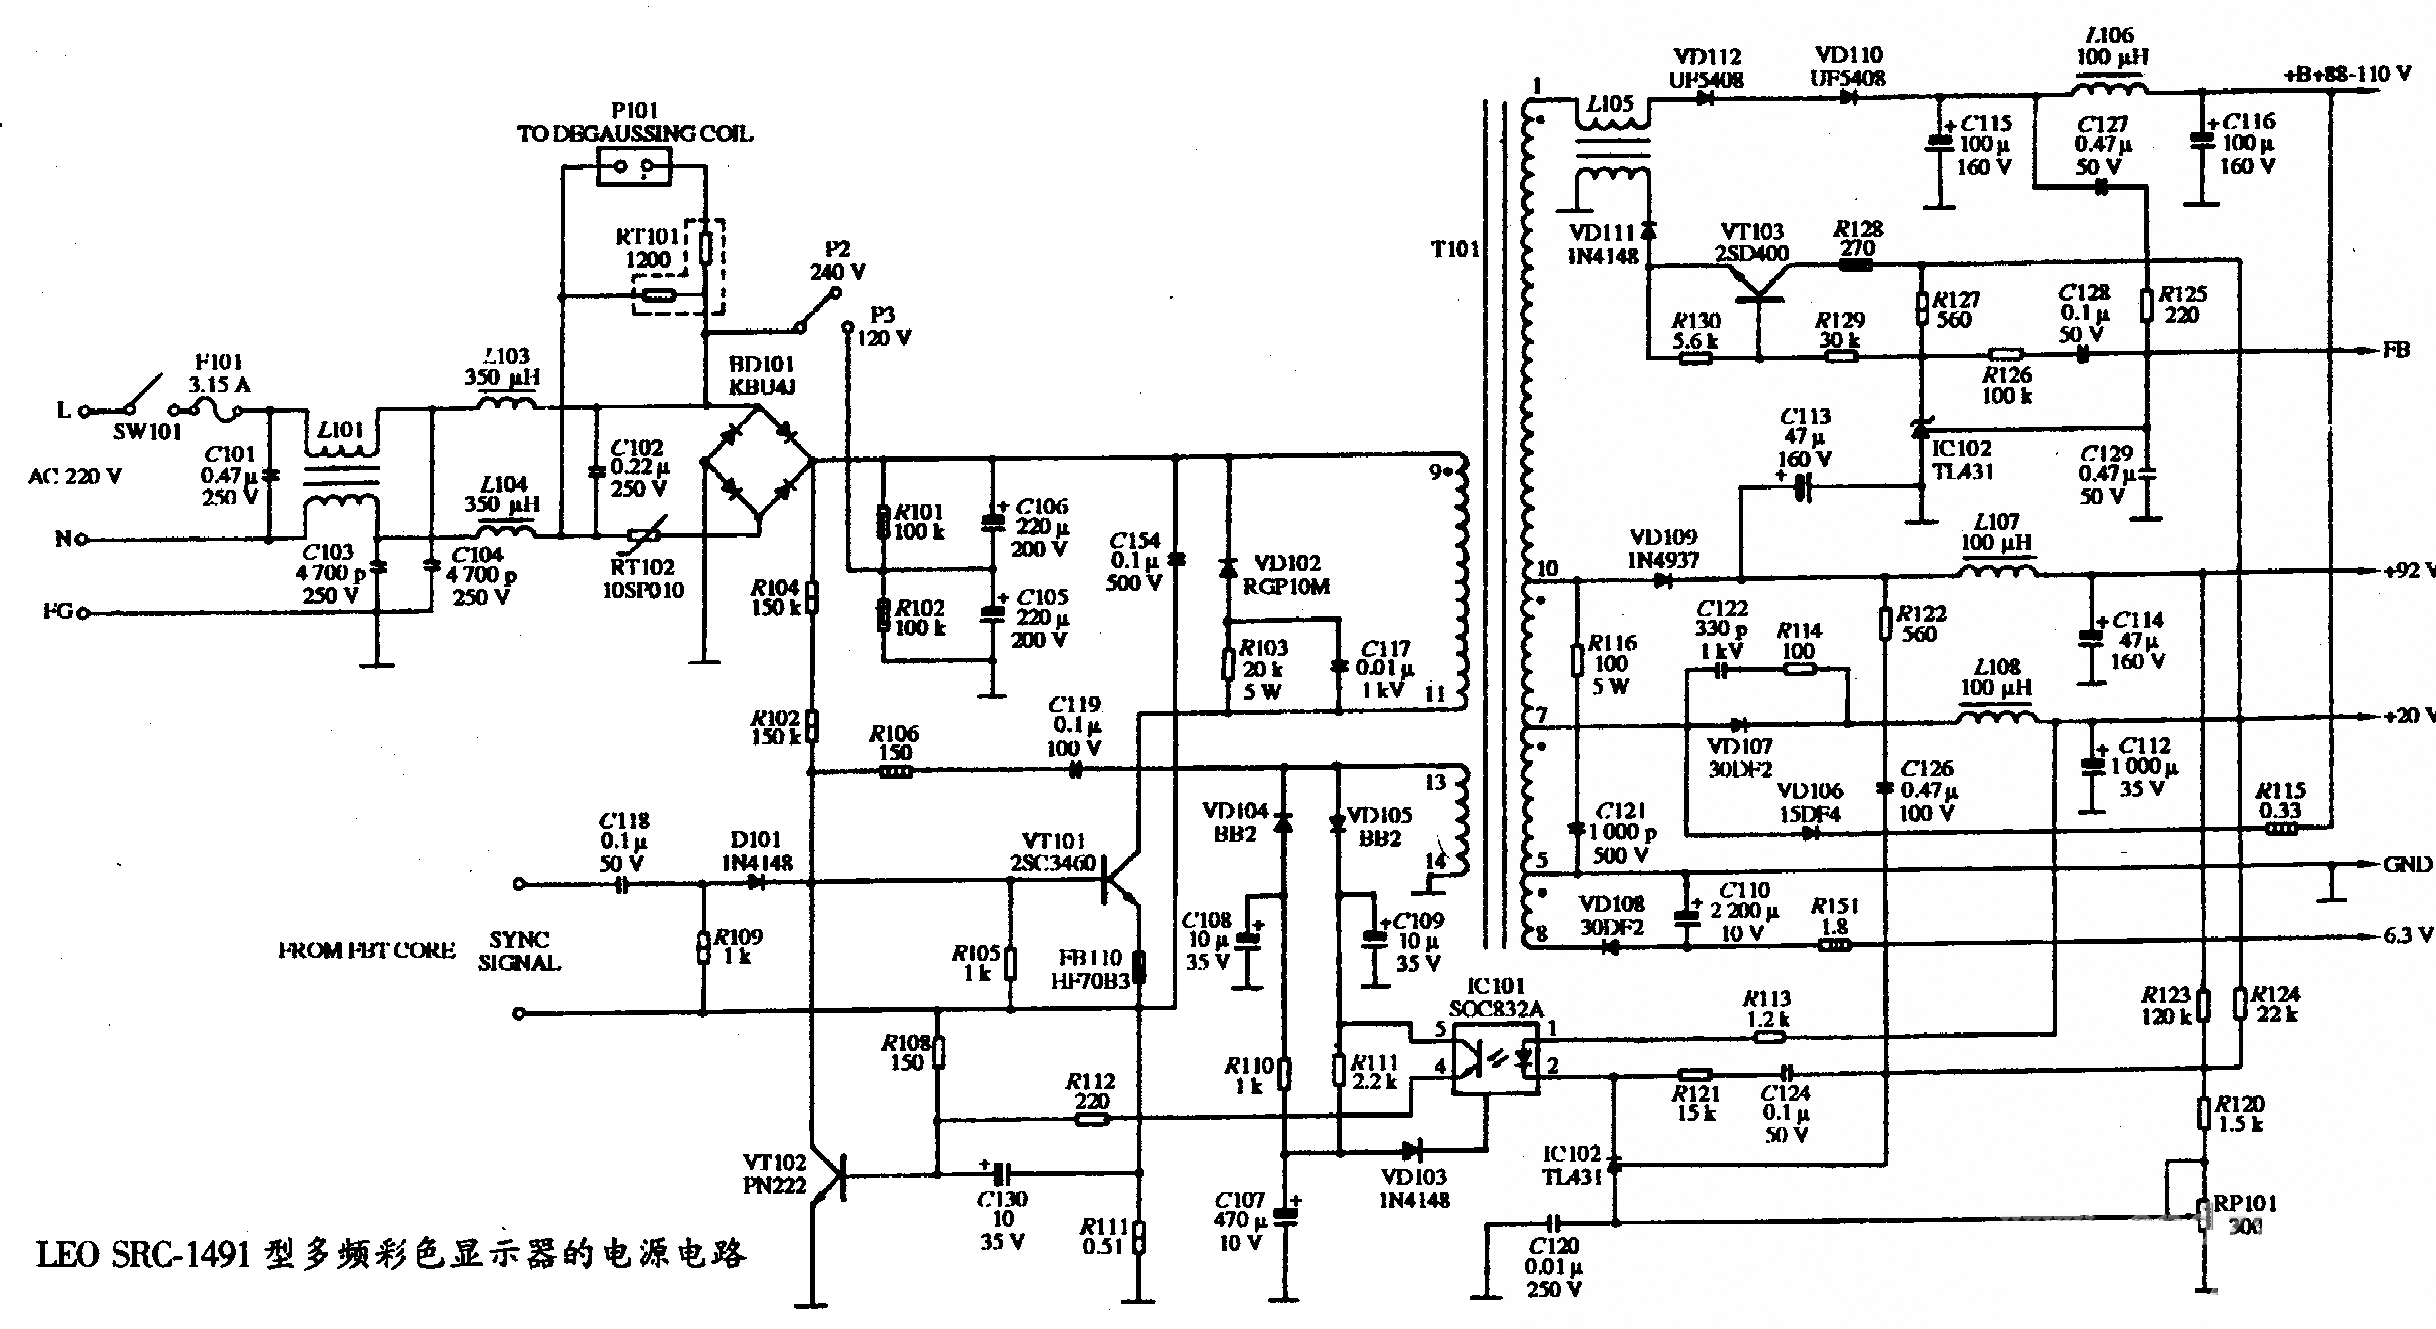 LEO SRC-1491型多频彩色显示器的电源电